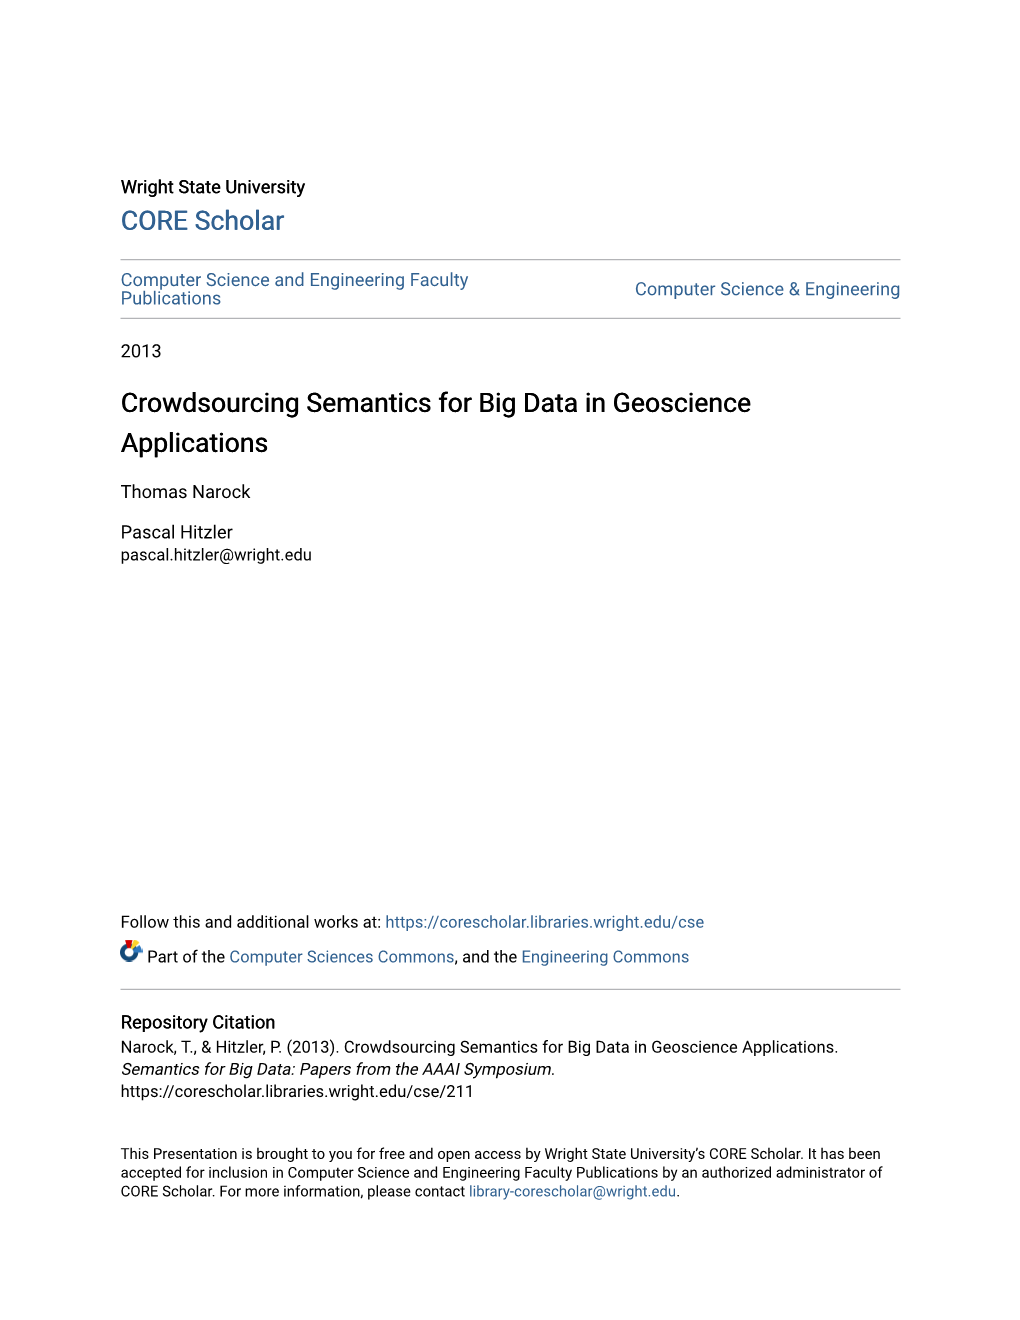 Crowdsourcing Semantics for Big Data in Geoscience Applications